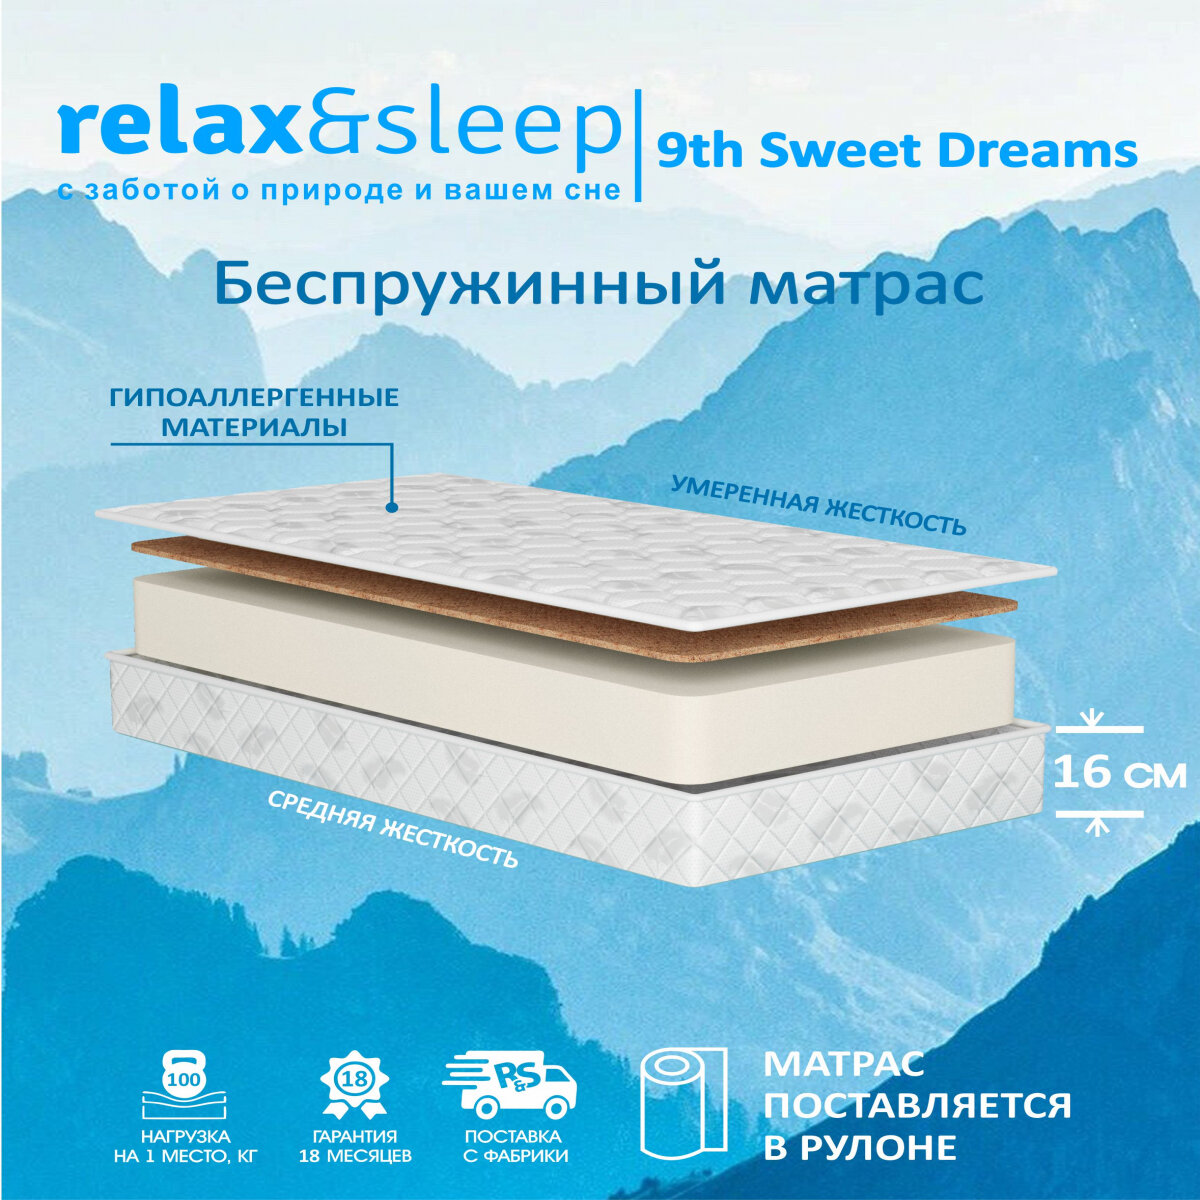 Матрас Relax&Sleep ортопедический беспружинный 9th Sweet Dreams (120 / 180)